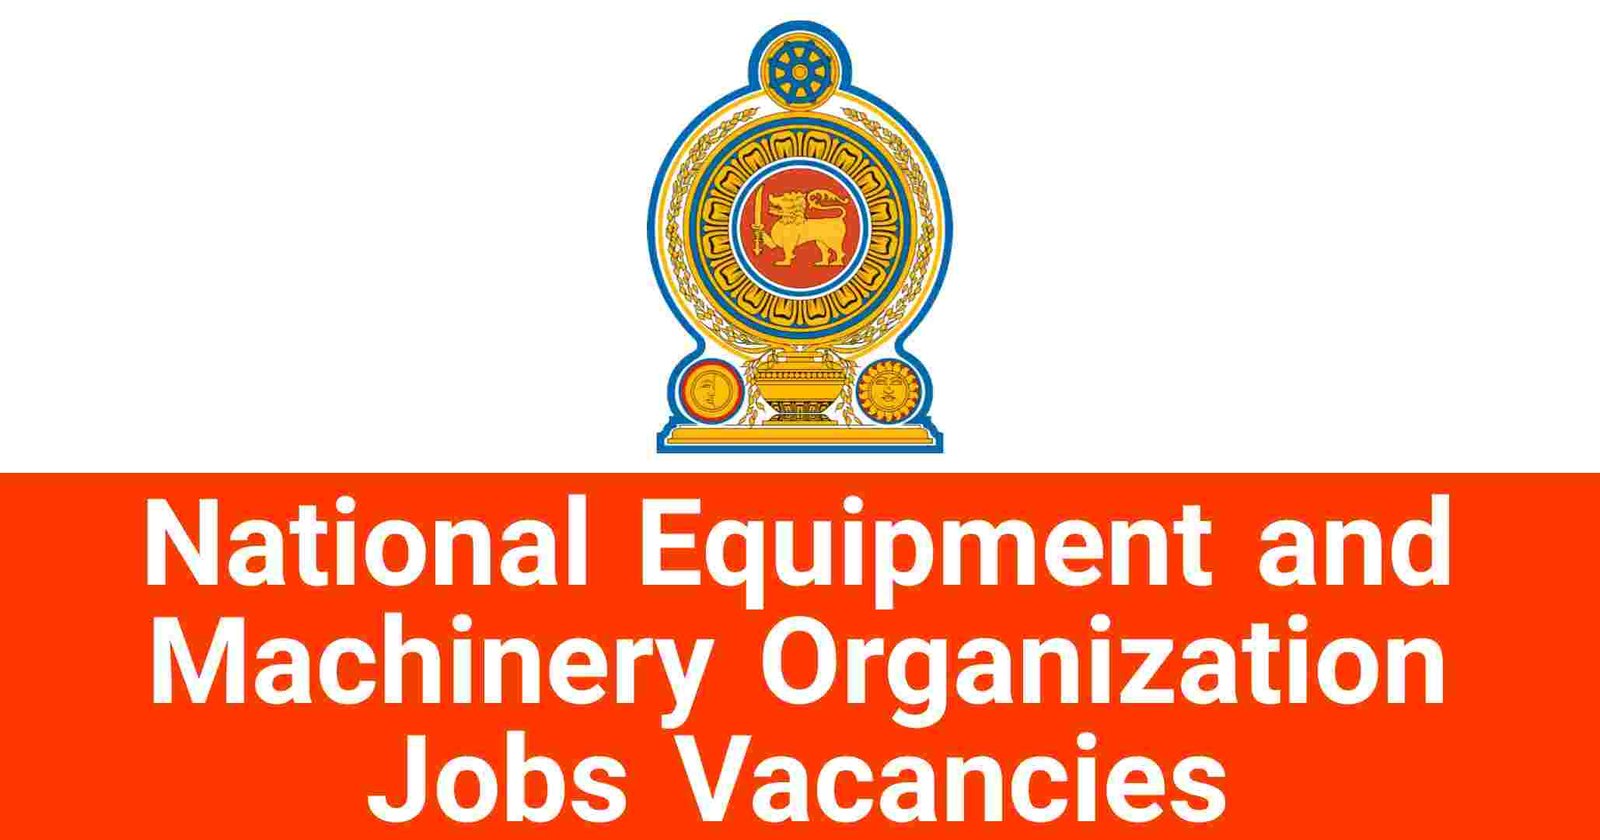 National Equipment and Machinery Organization Jobs Vacancies